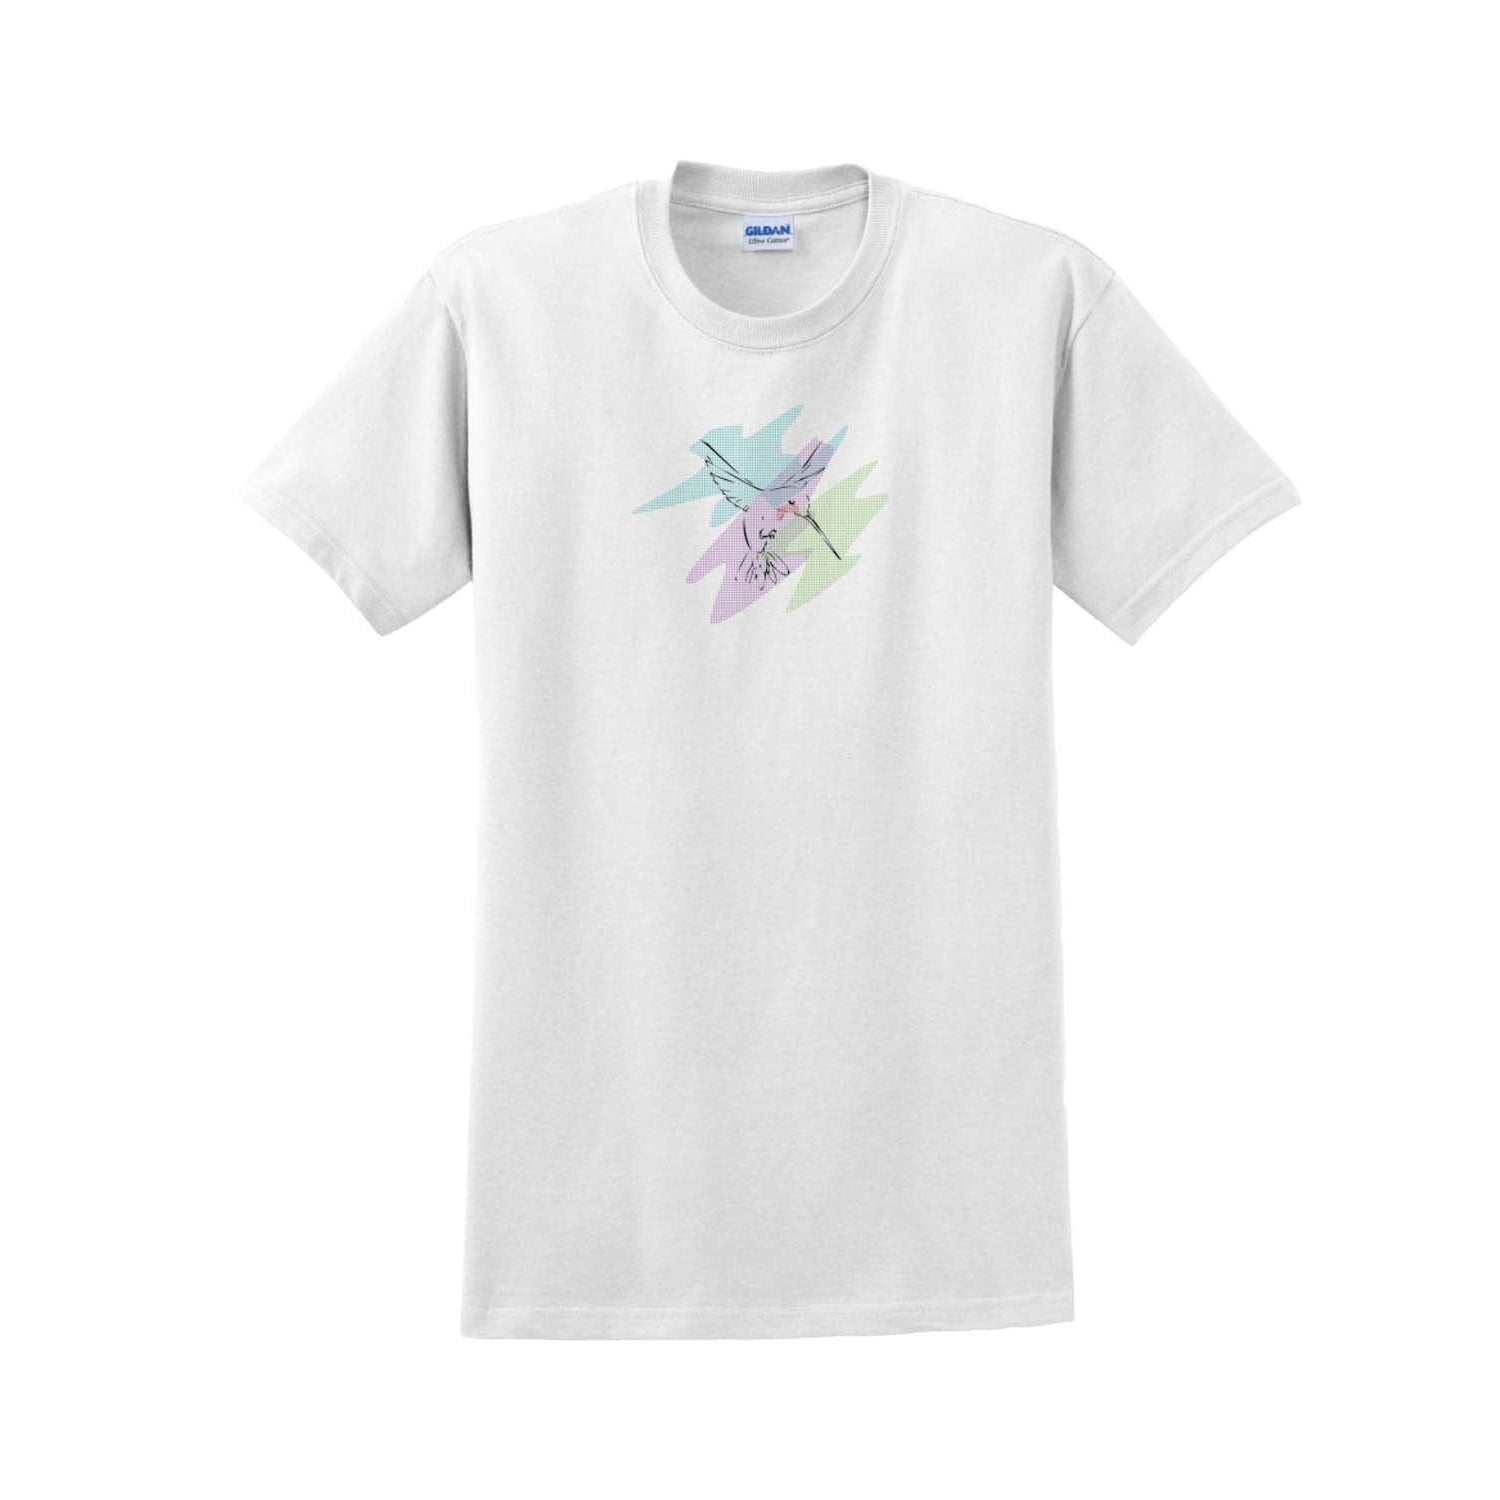 Hummingbird Splash, by Nap Time®